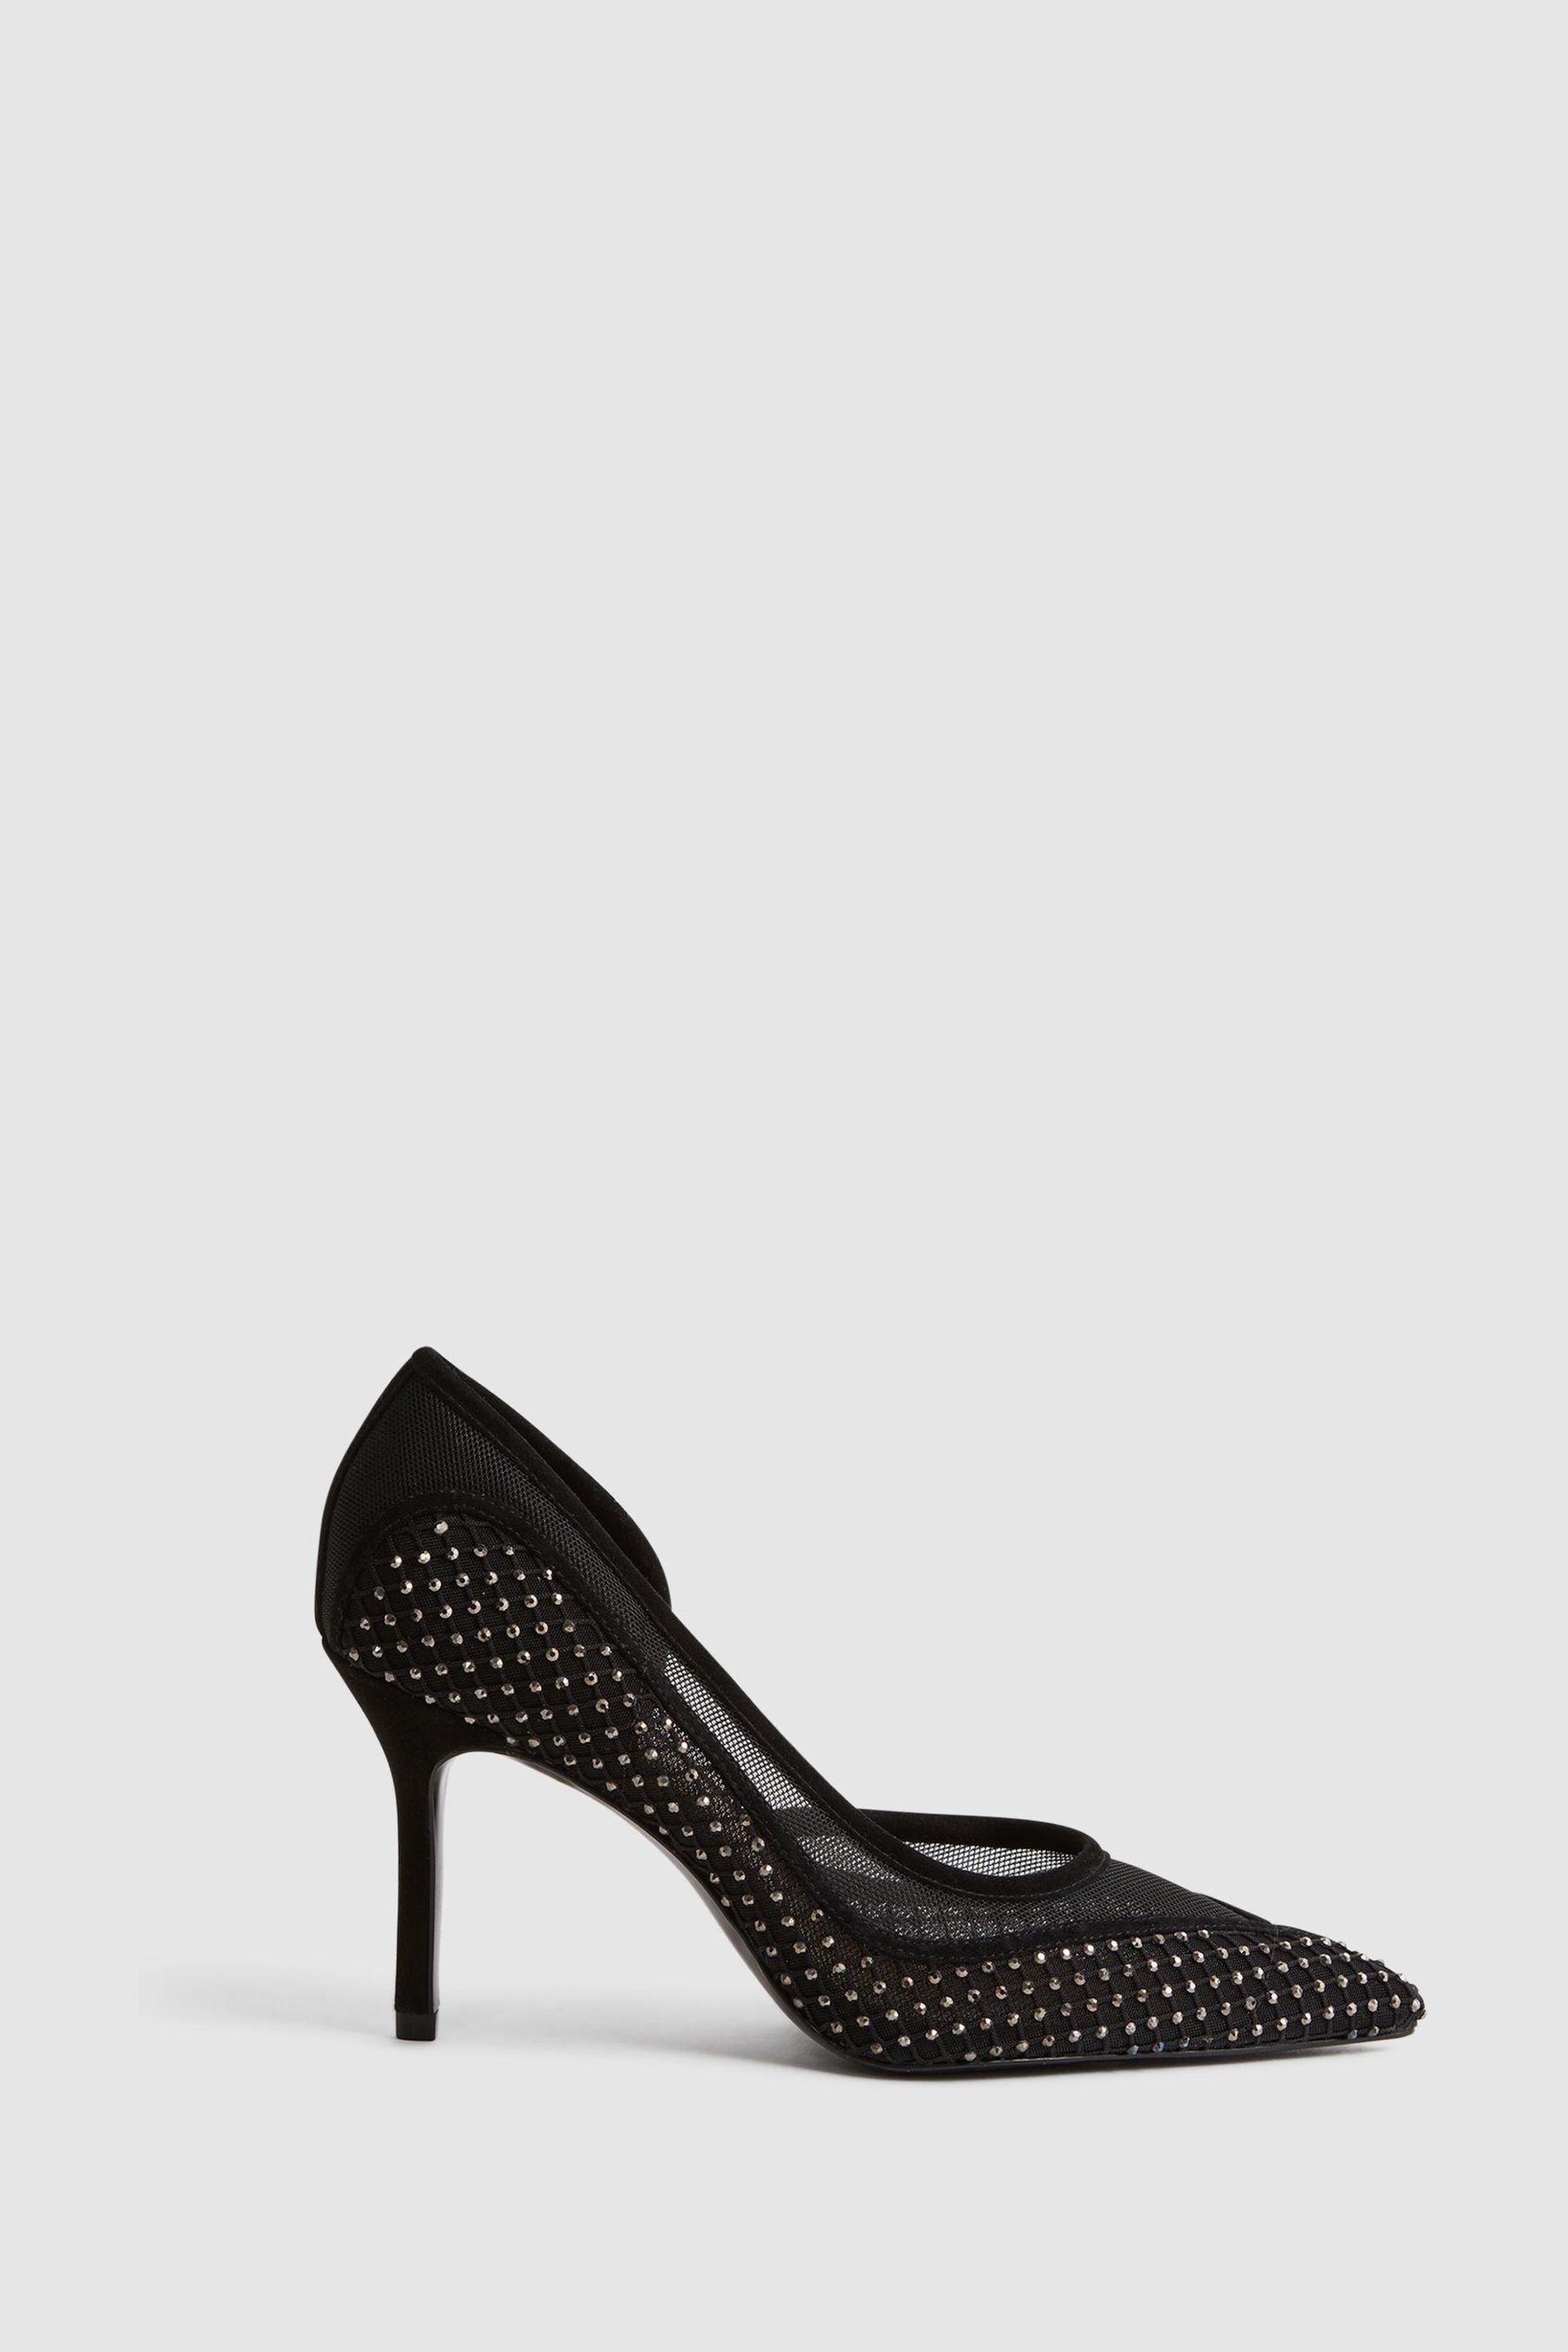 Reiss Keri - Black Embellished Mesh Court Shoes, Uk 4 Eu 37